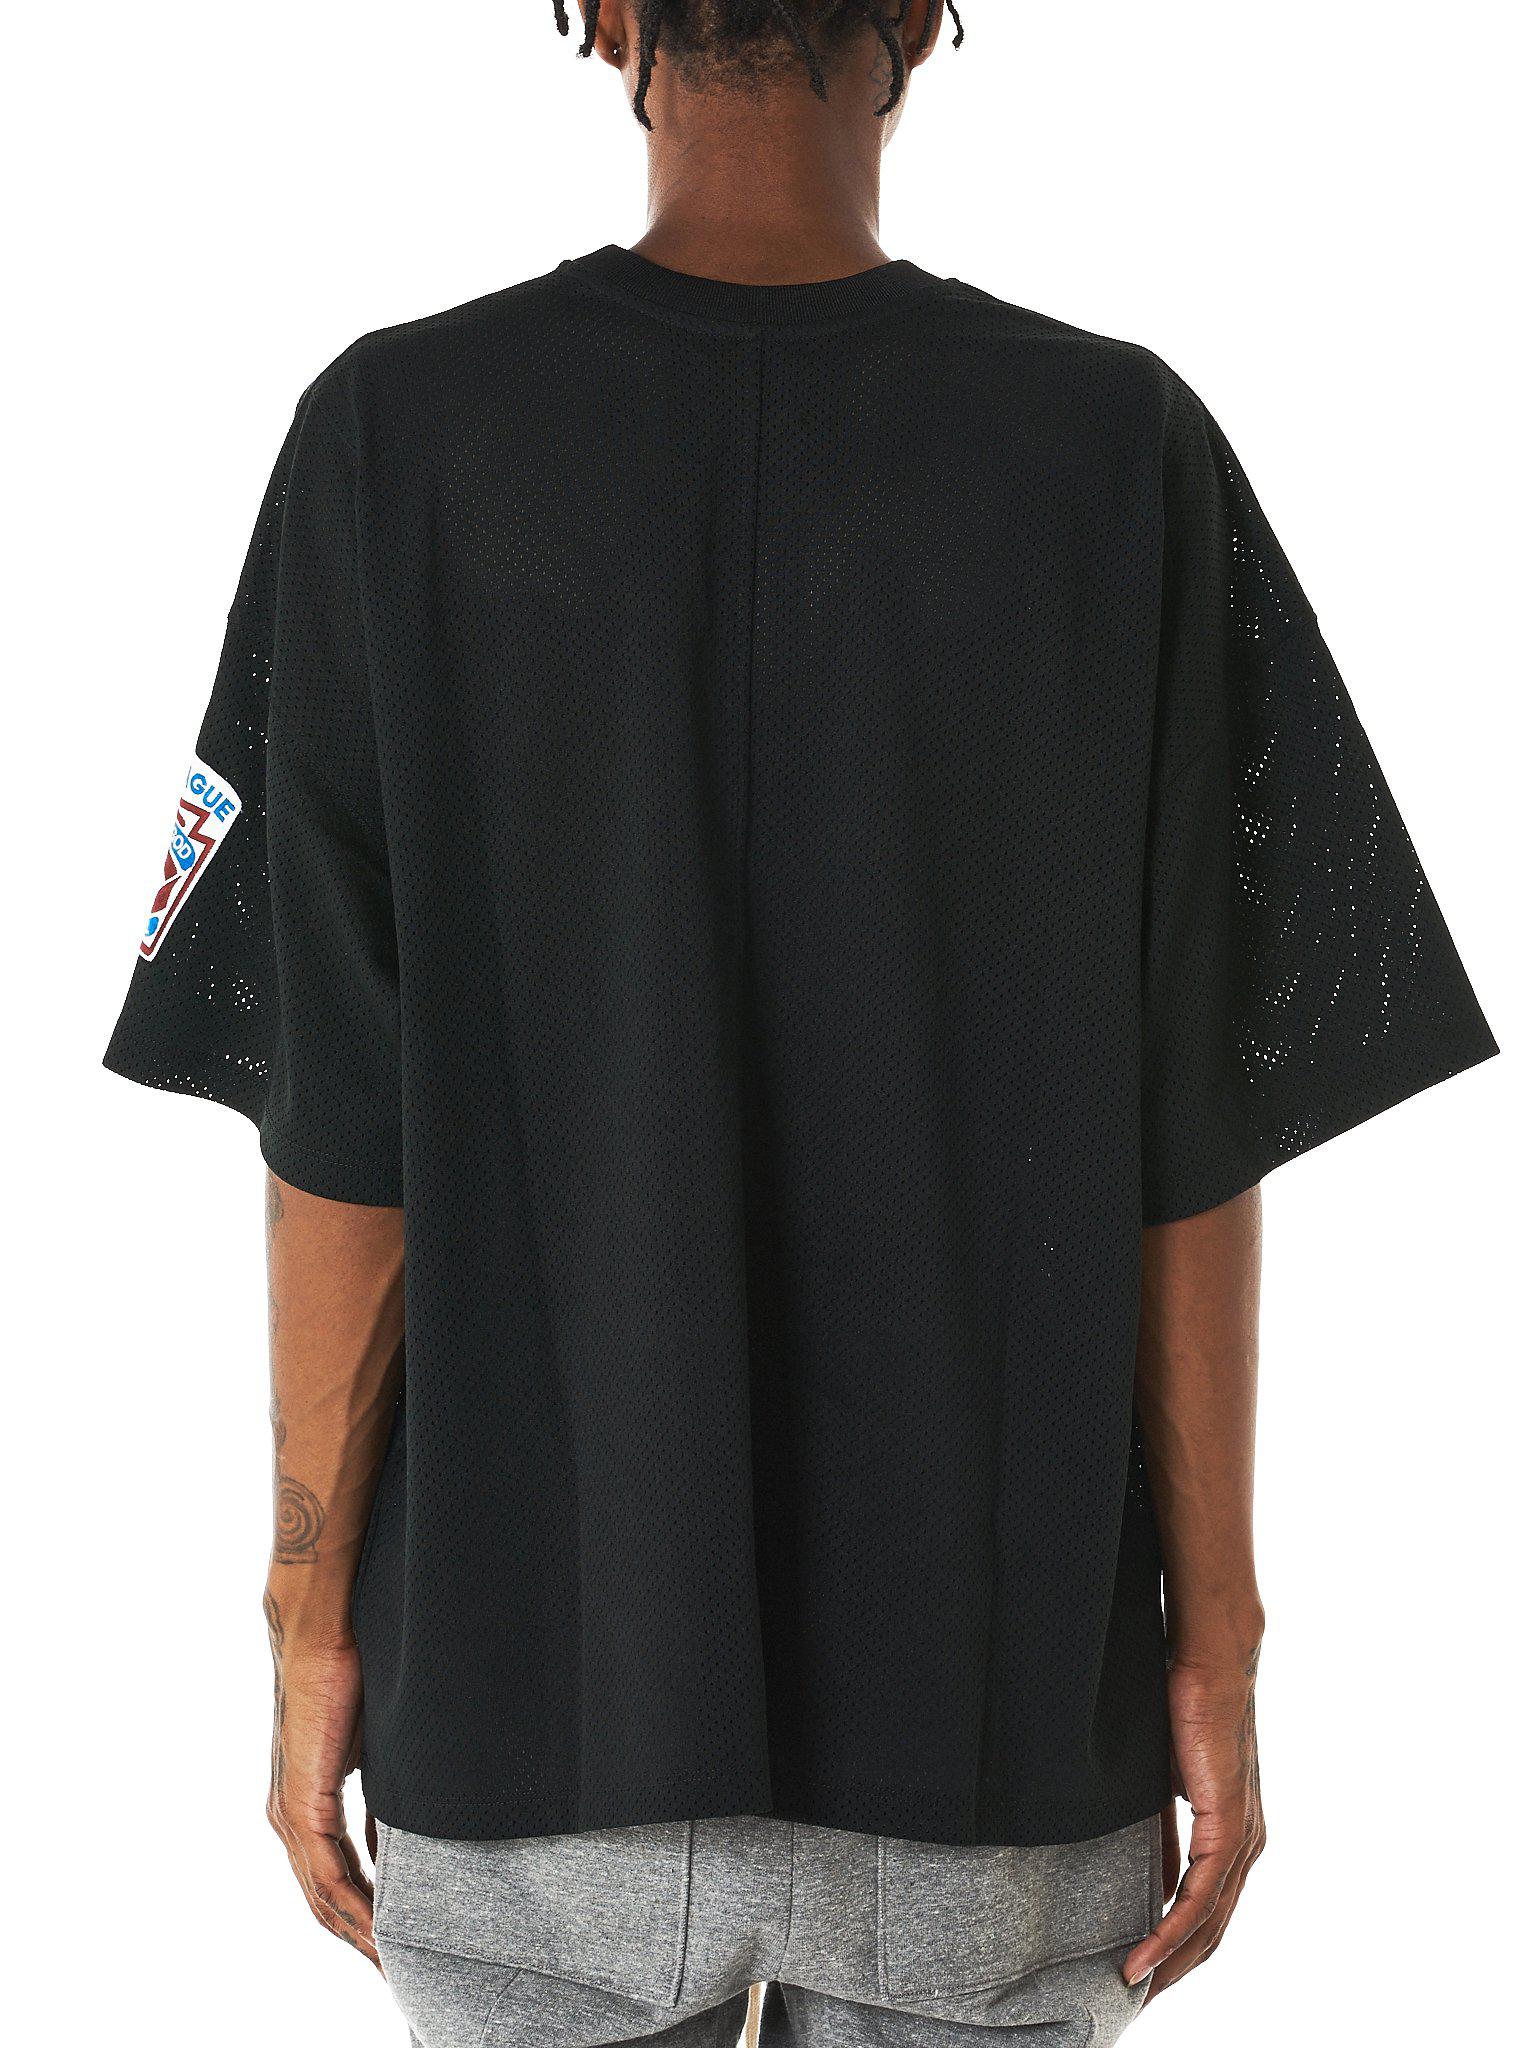 Fear Of God Silk Embroidery Baseball Jersey in Black for Men - Lyst